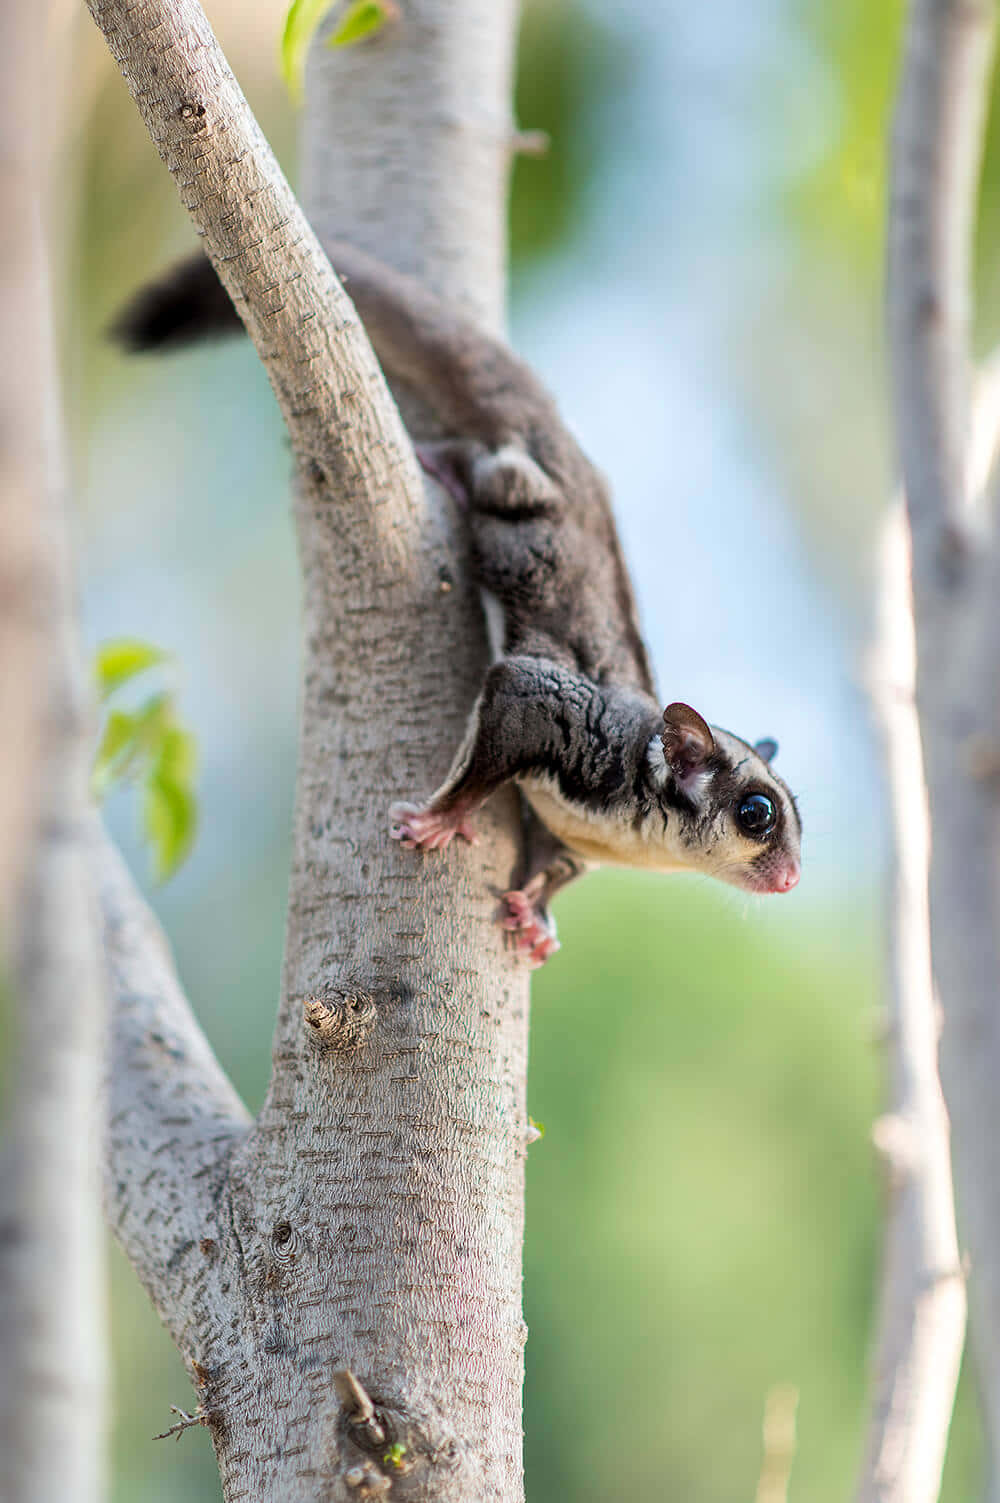 A Small Squirrel Climbing A Tree